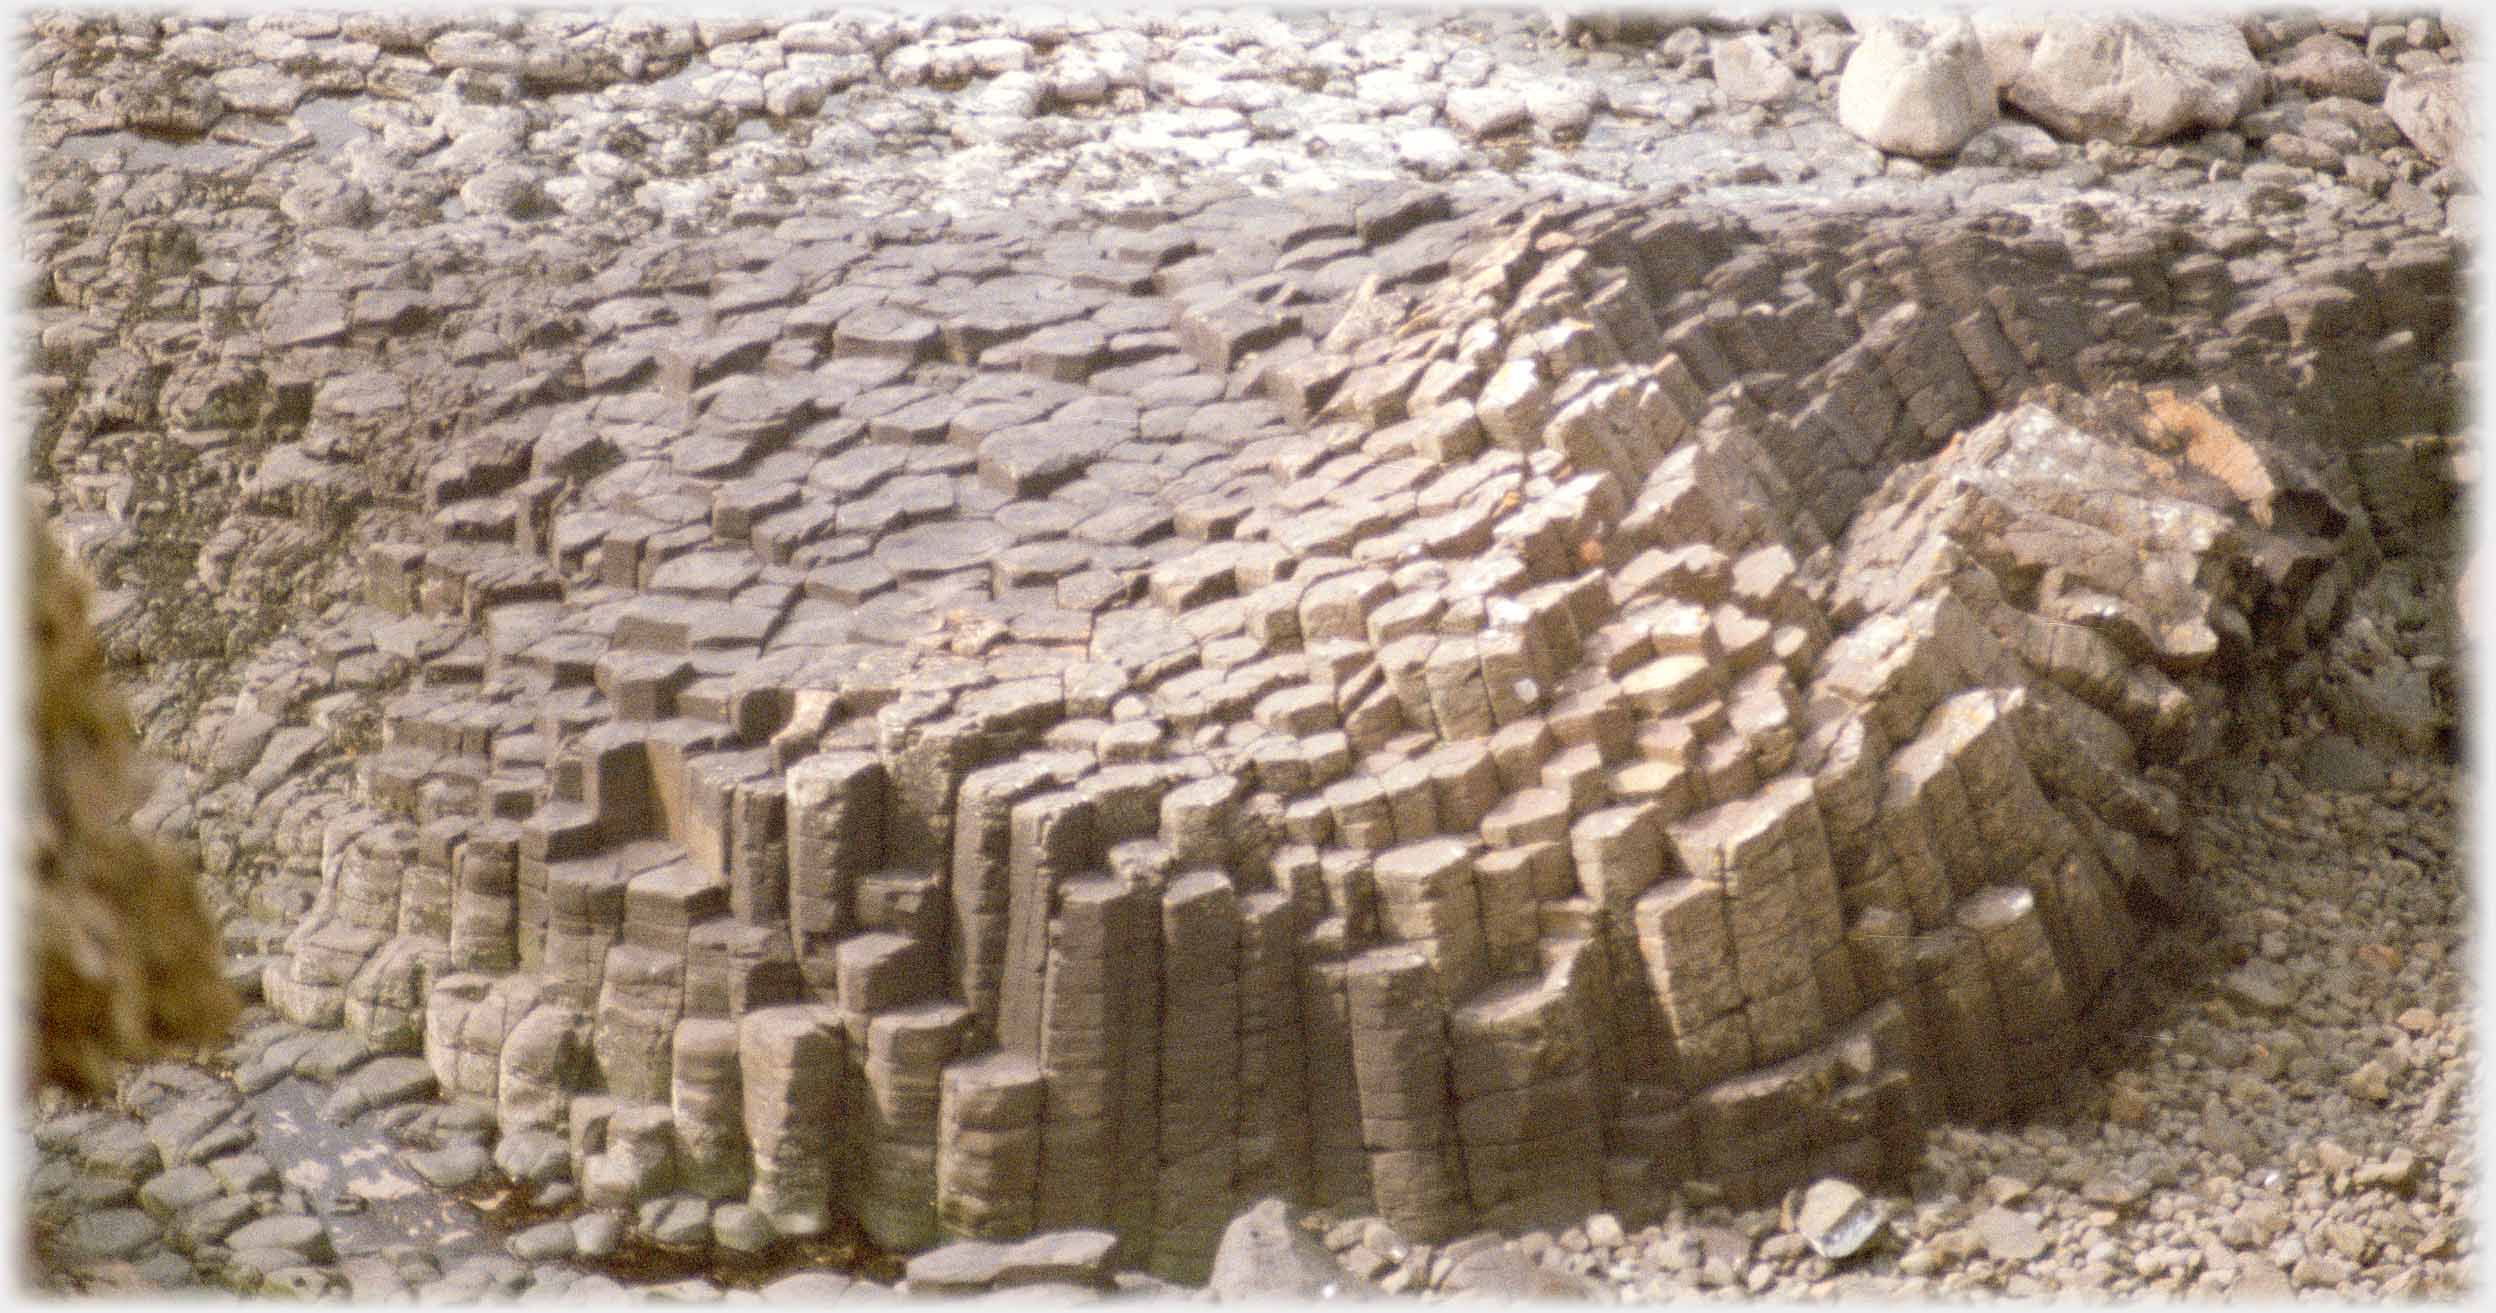 A packed area of vertical basalt columns.